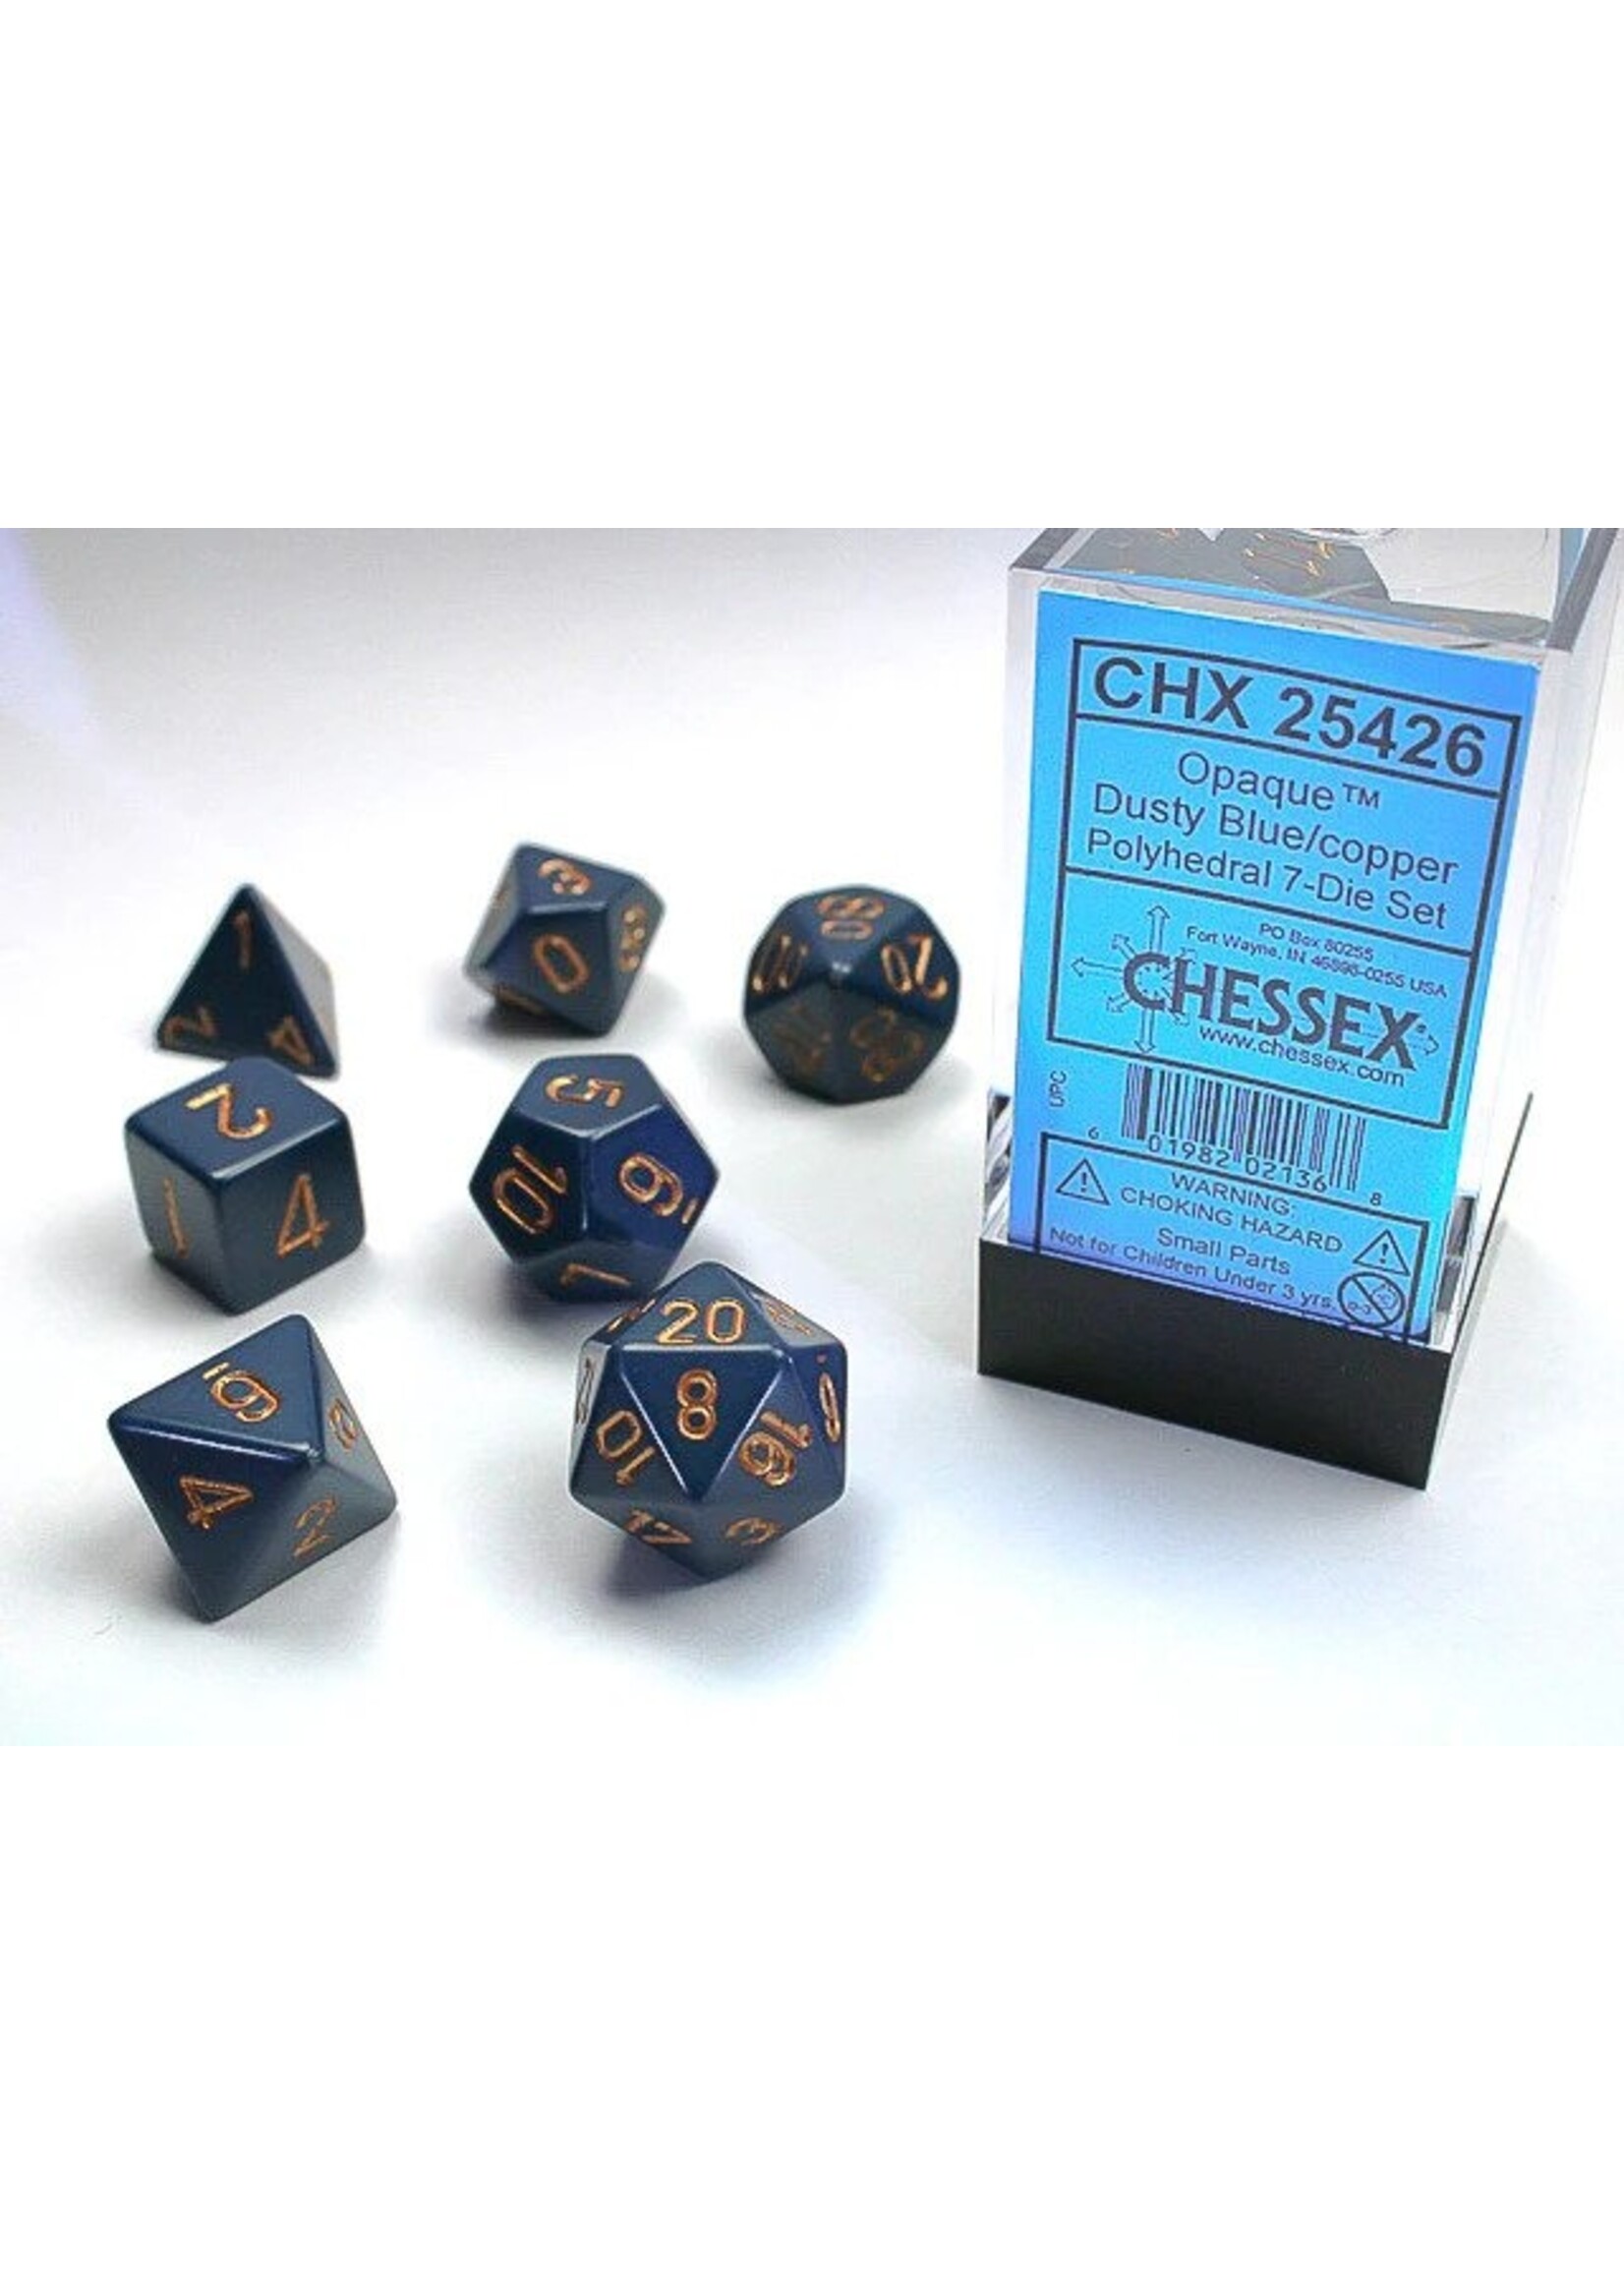 Chessex OPAQ 7die dusty blue/copper